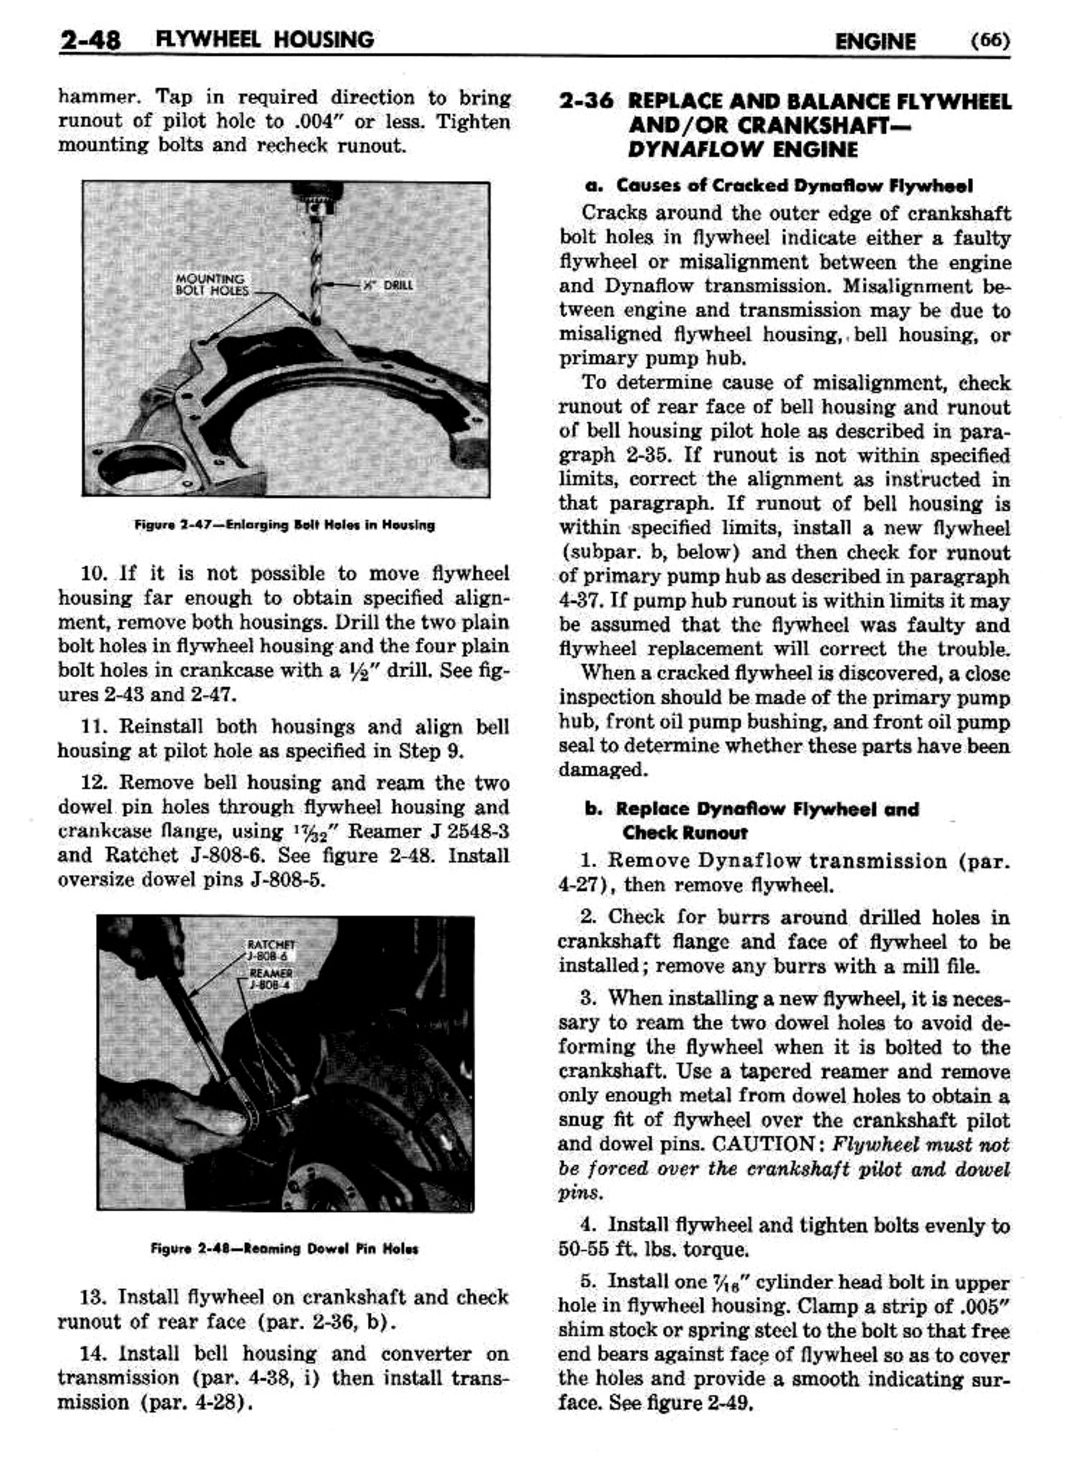 n_03 1951 Buick Shop Manual - Engine-048-048.jpg